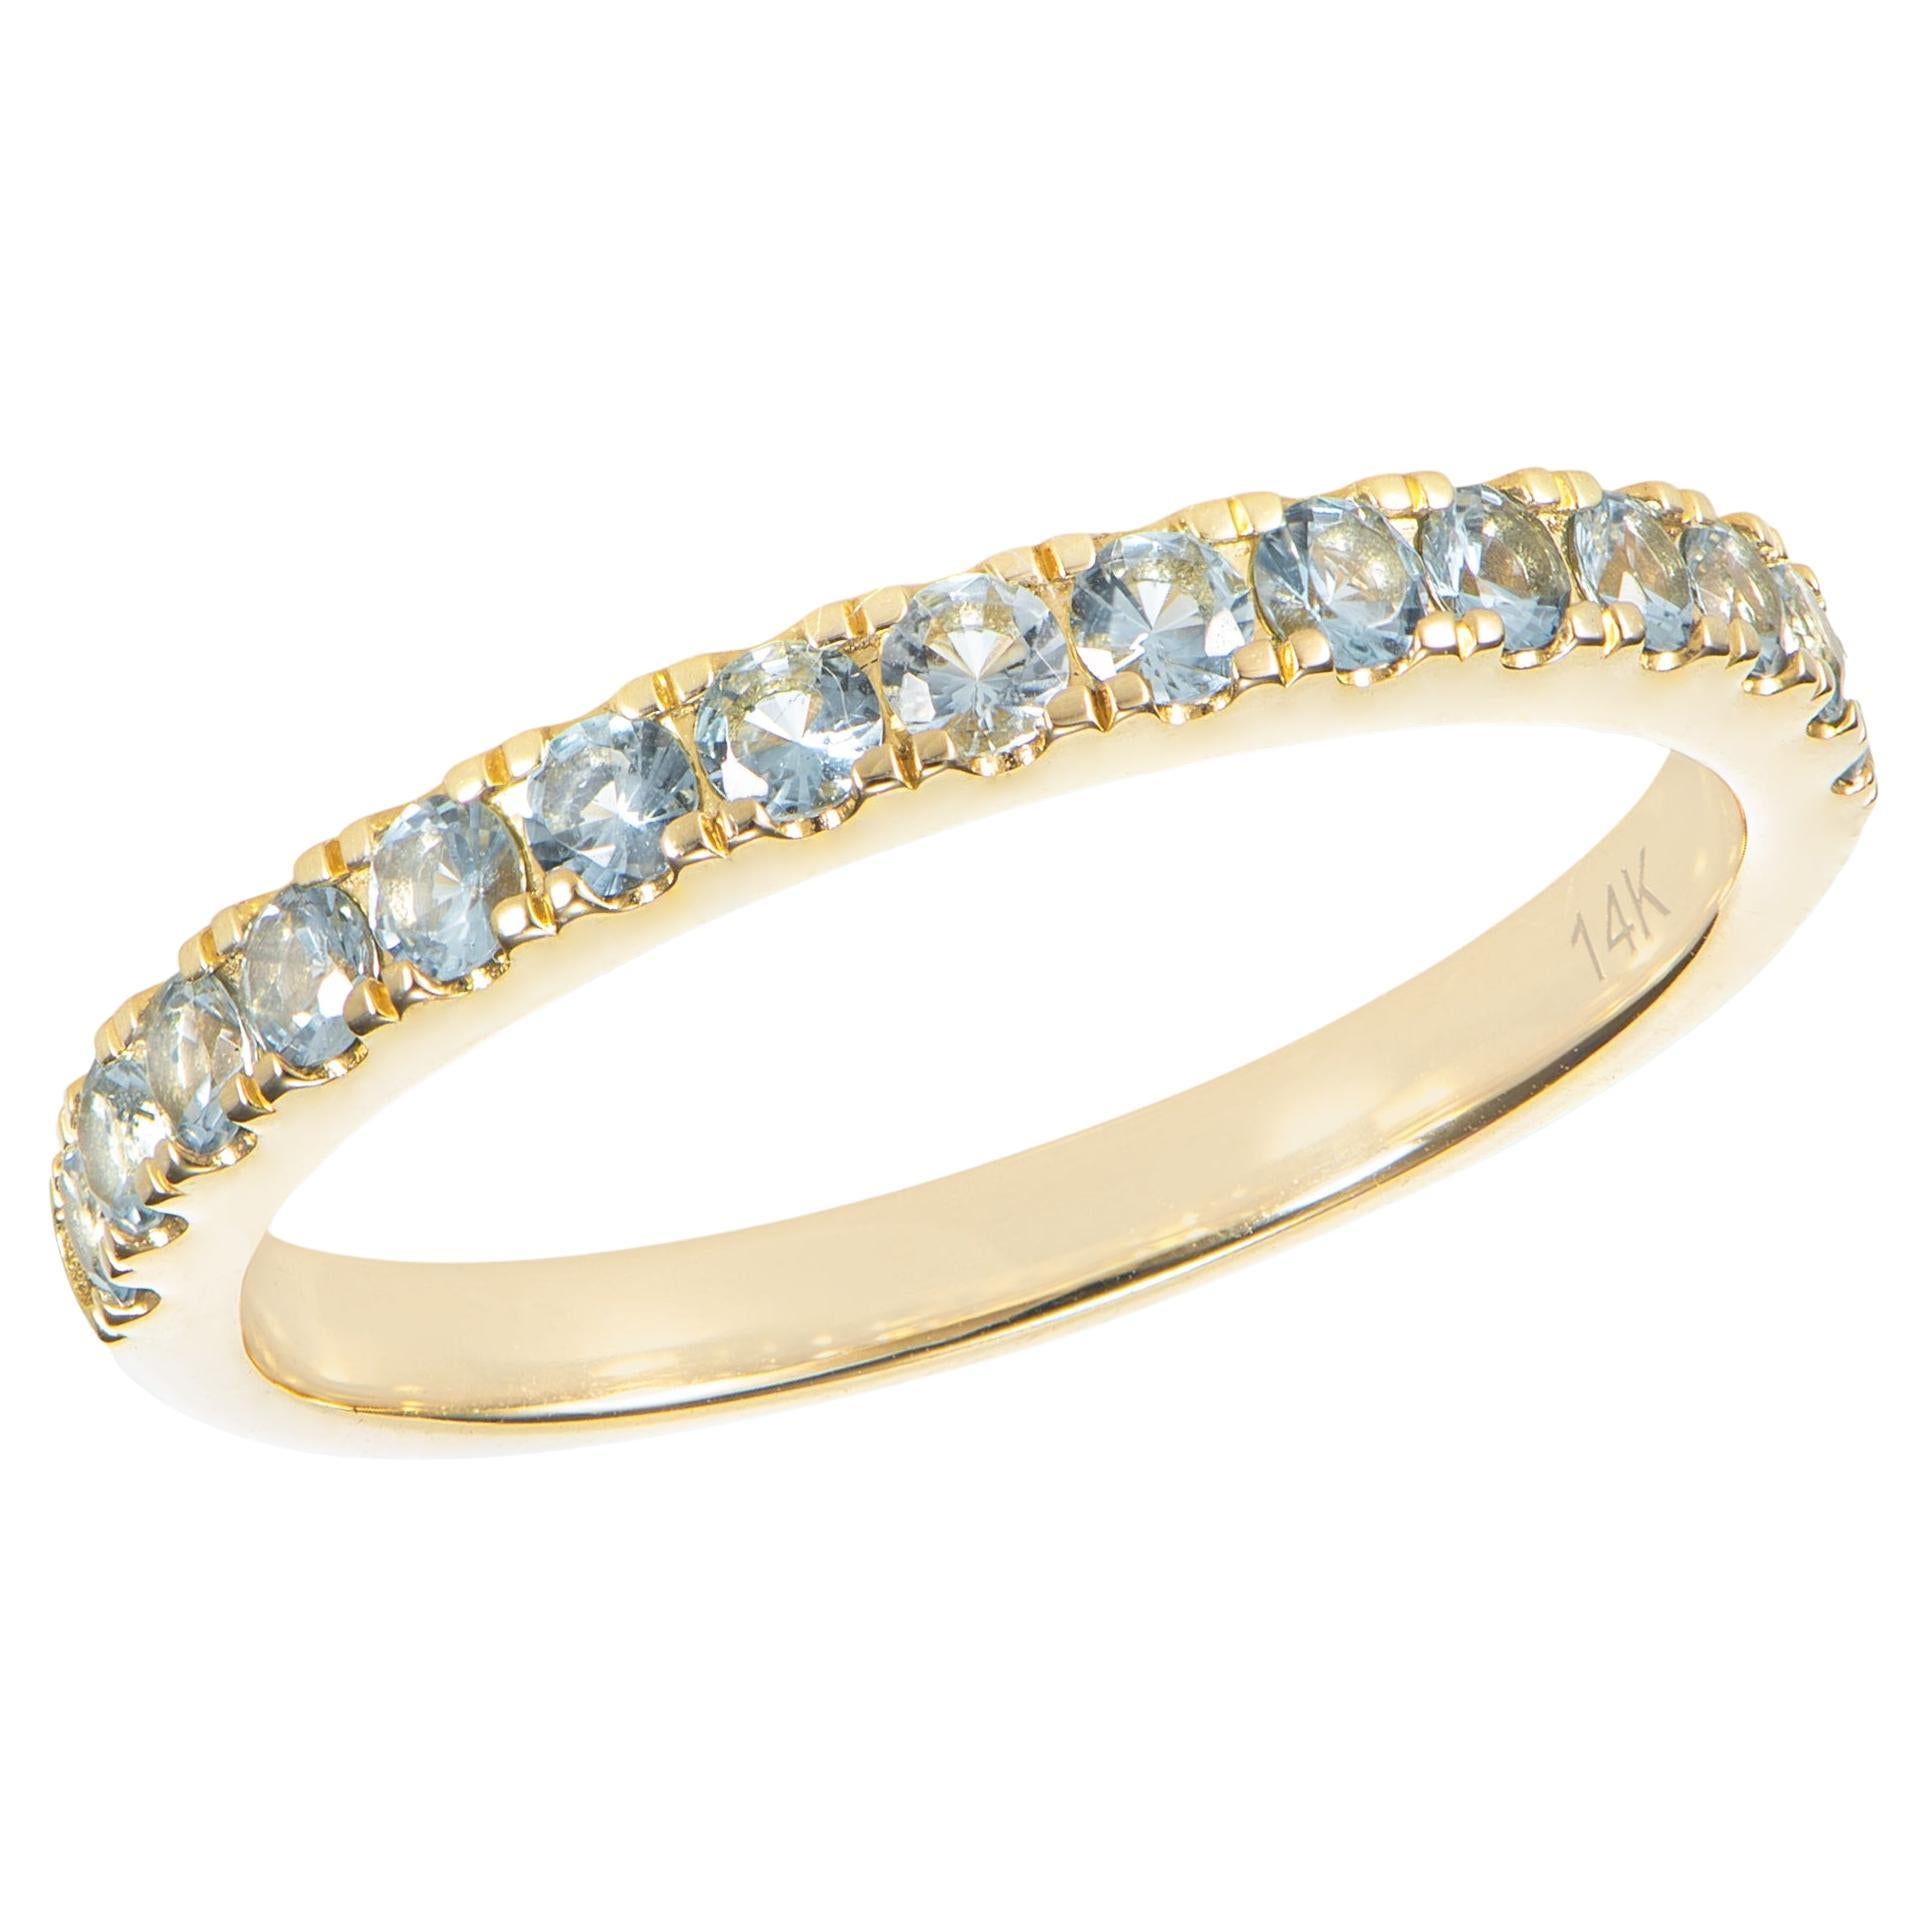 0.61 Carat Sky Blue Topaz Eternity Ring in 14Karat Yellow Gold. For Sale